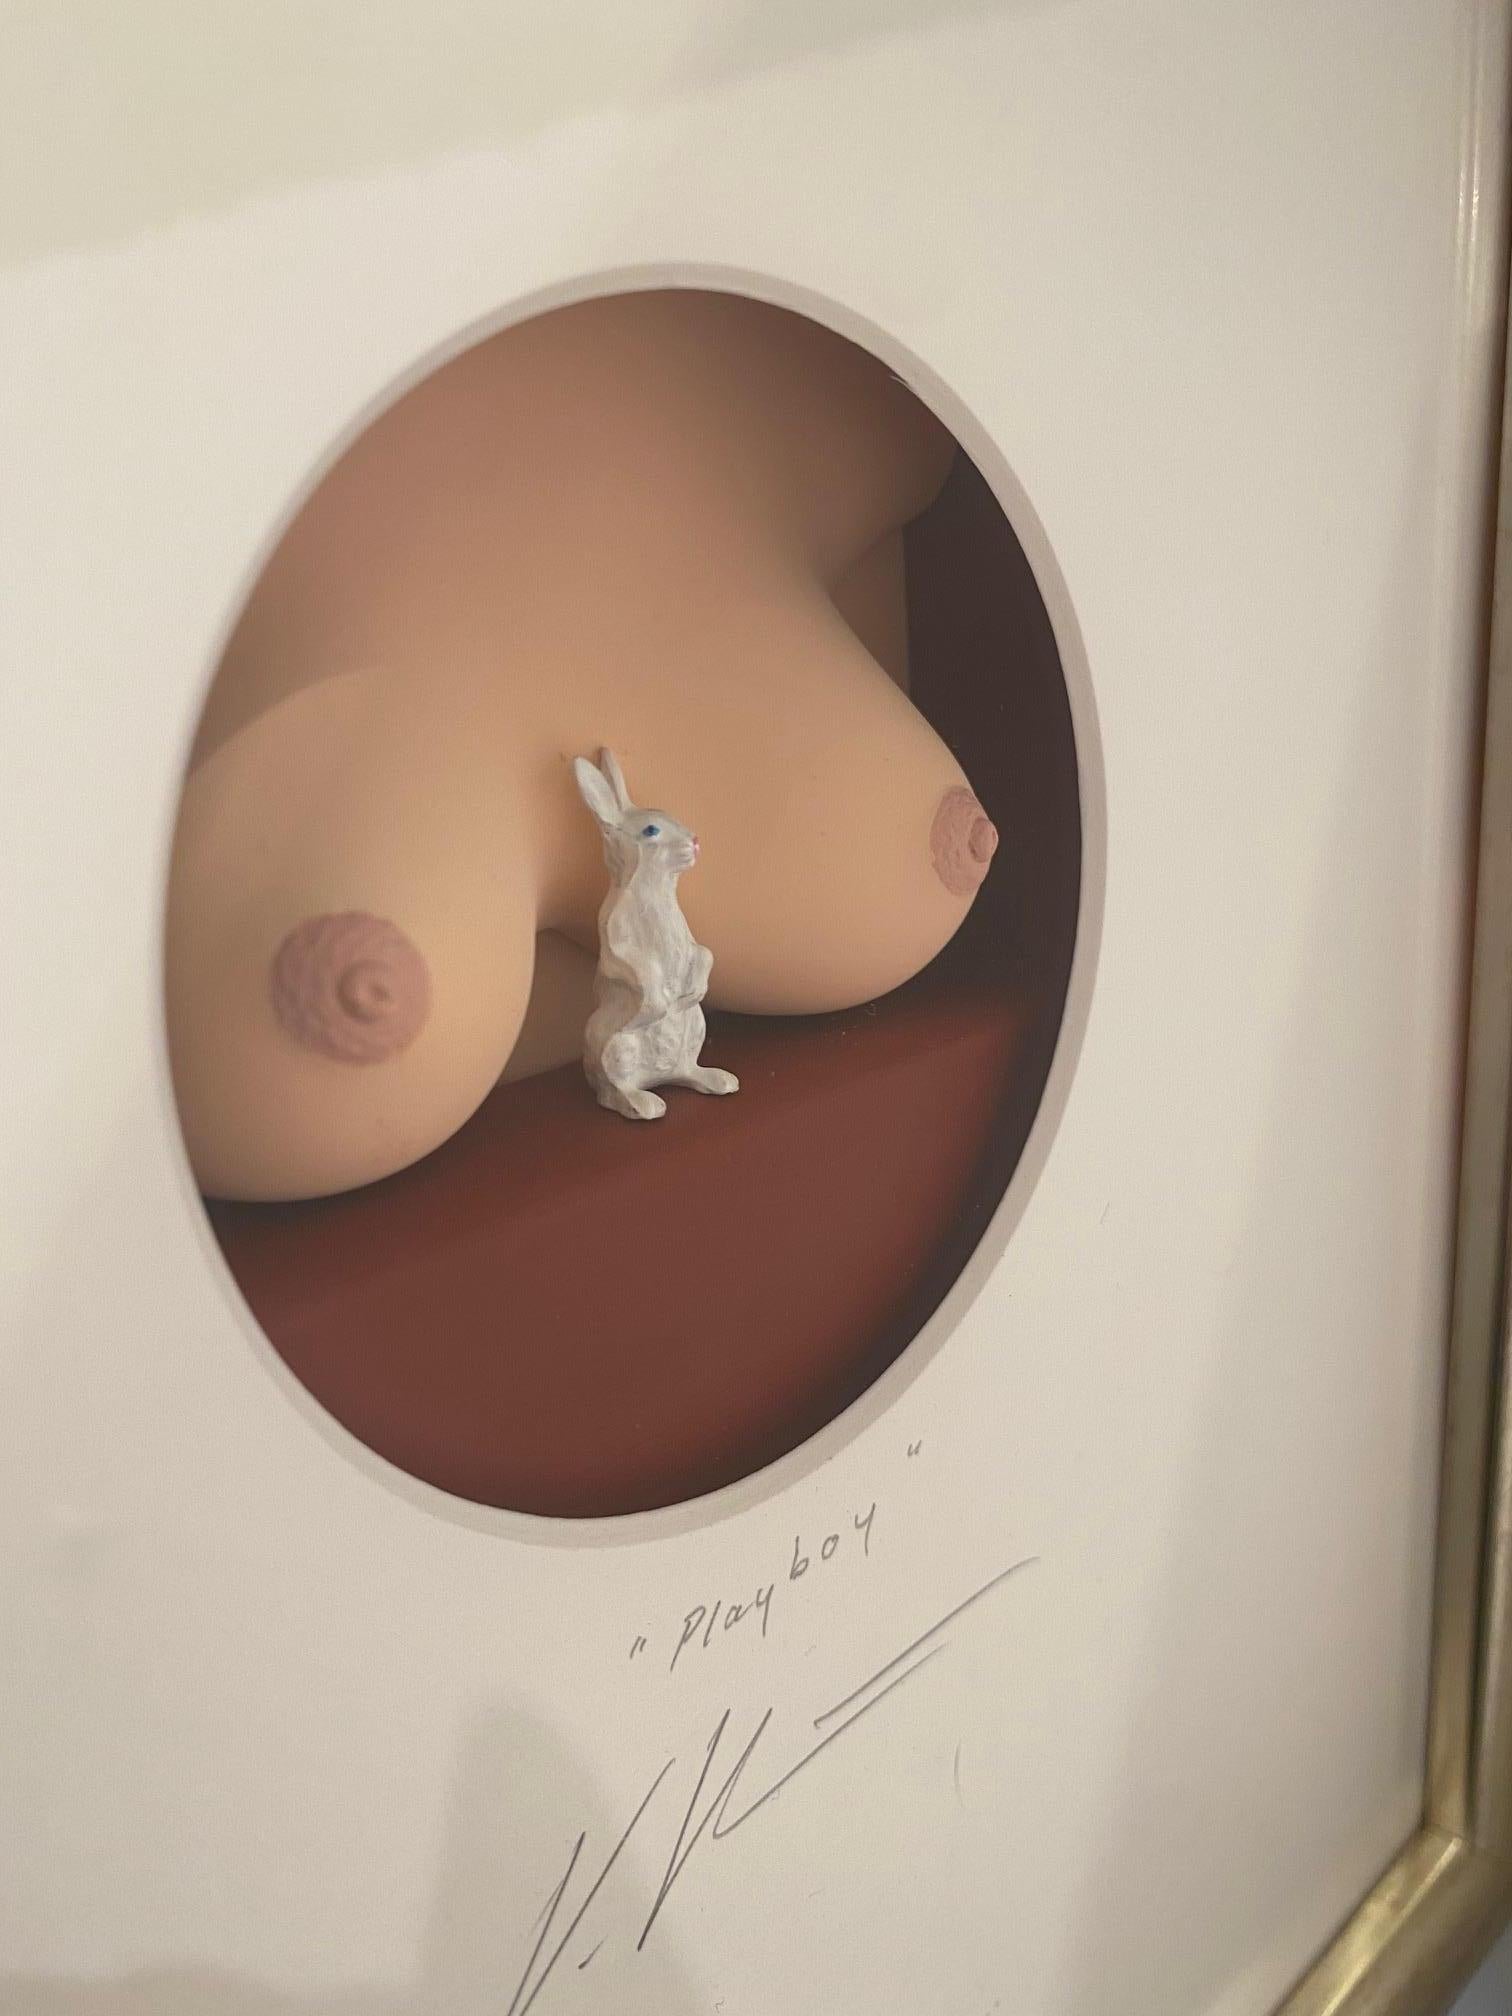 Playboy - original contemporary sexy minimalist art work by Volker Kuhn 1